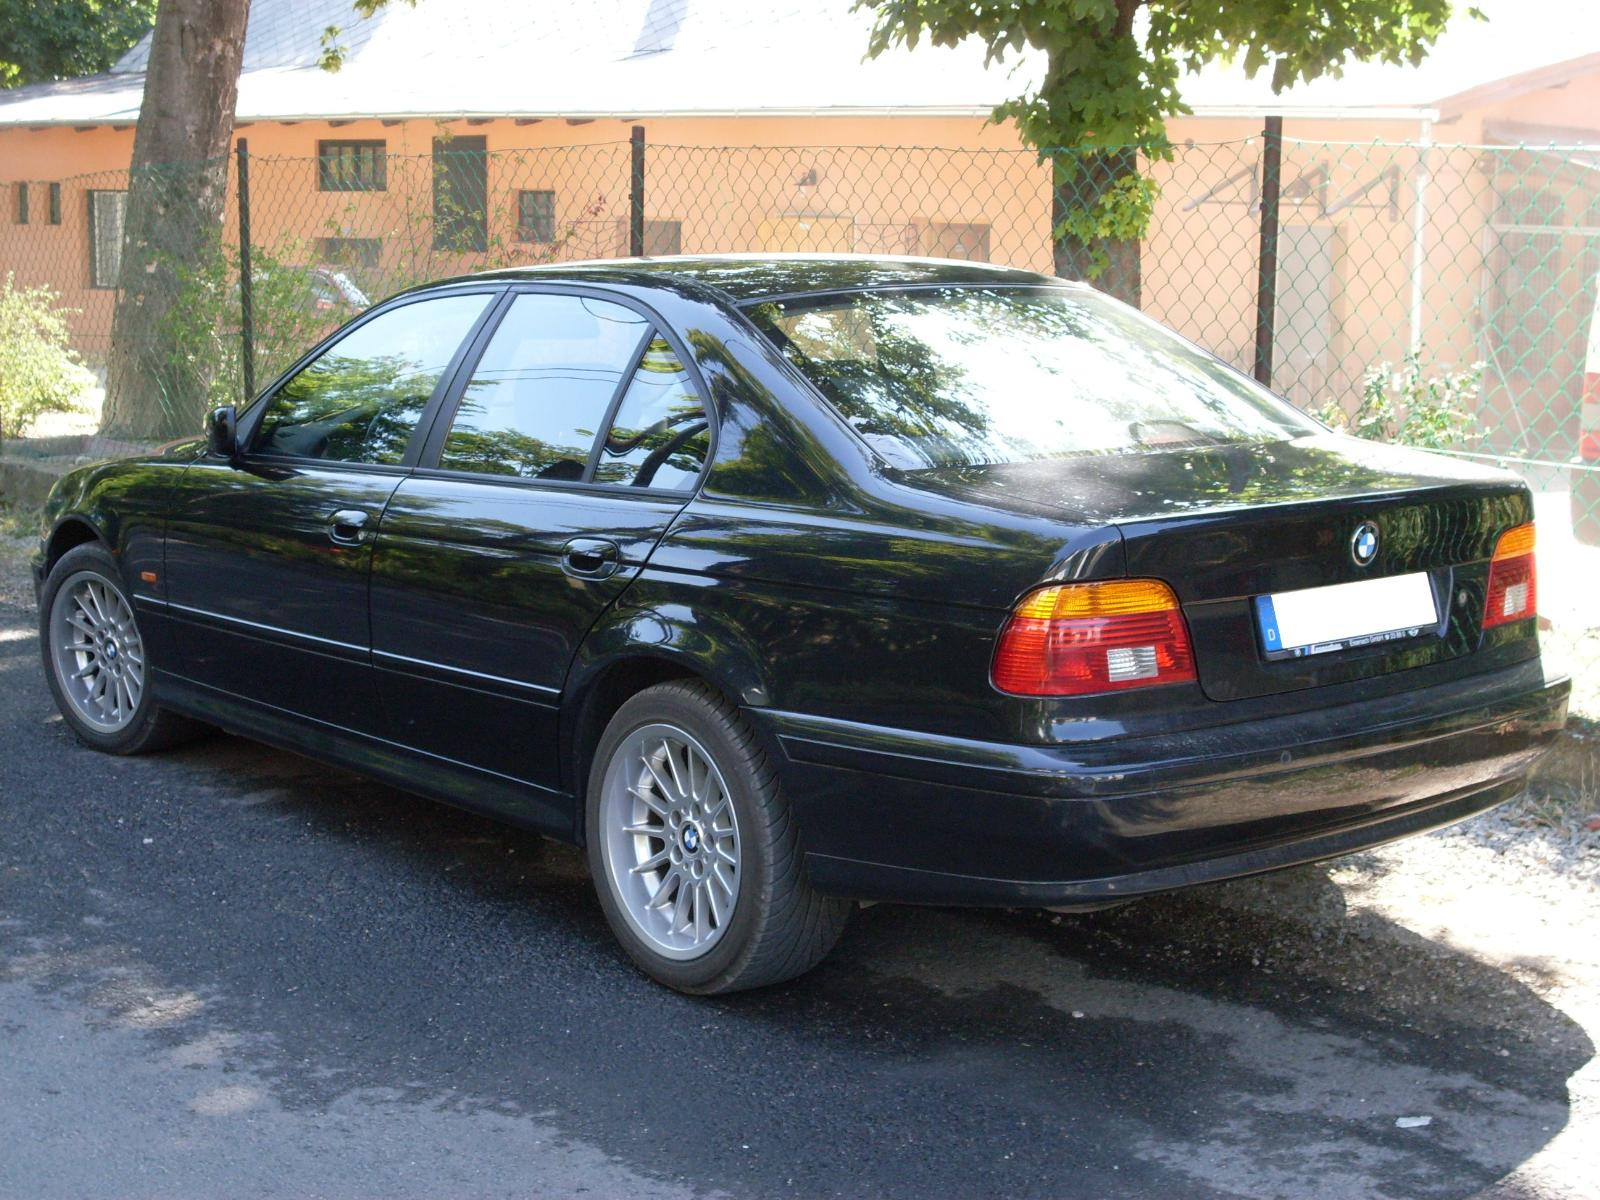 BMW 5-series (e39)